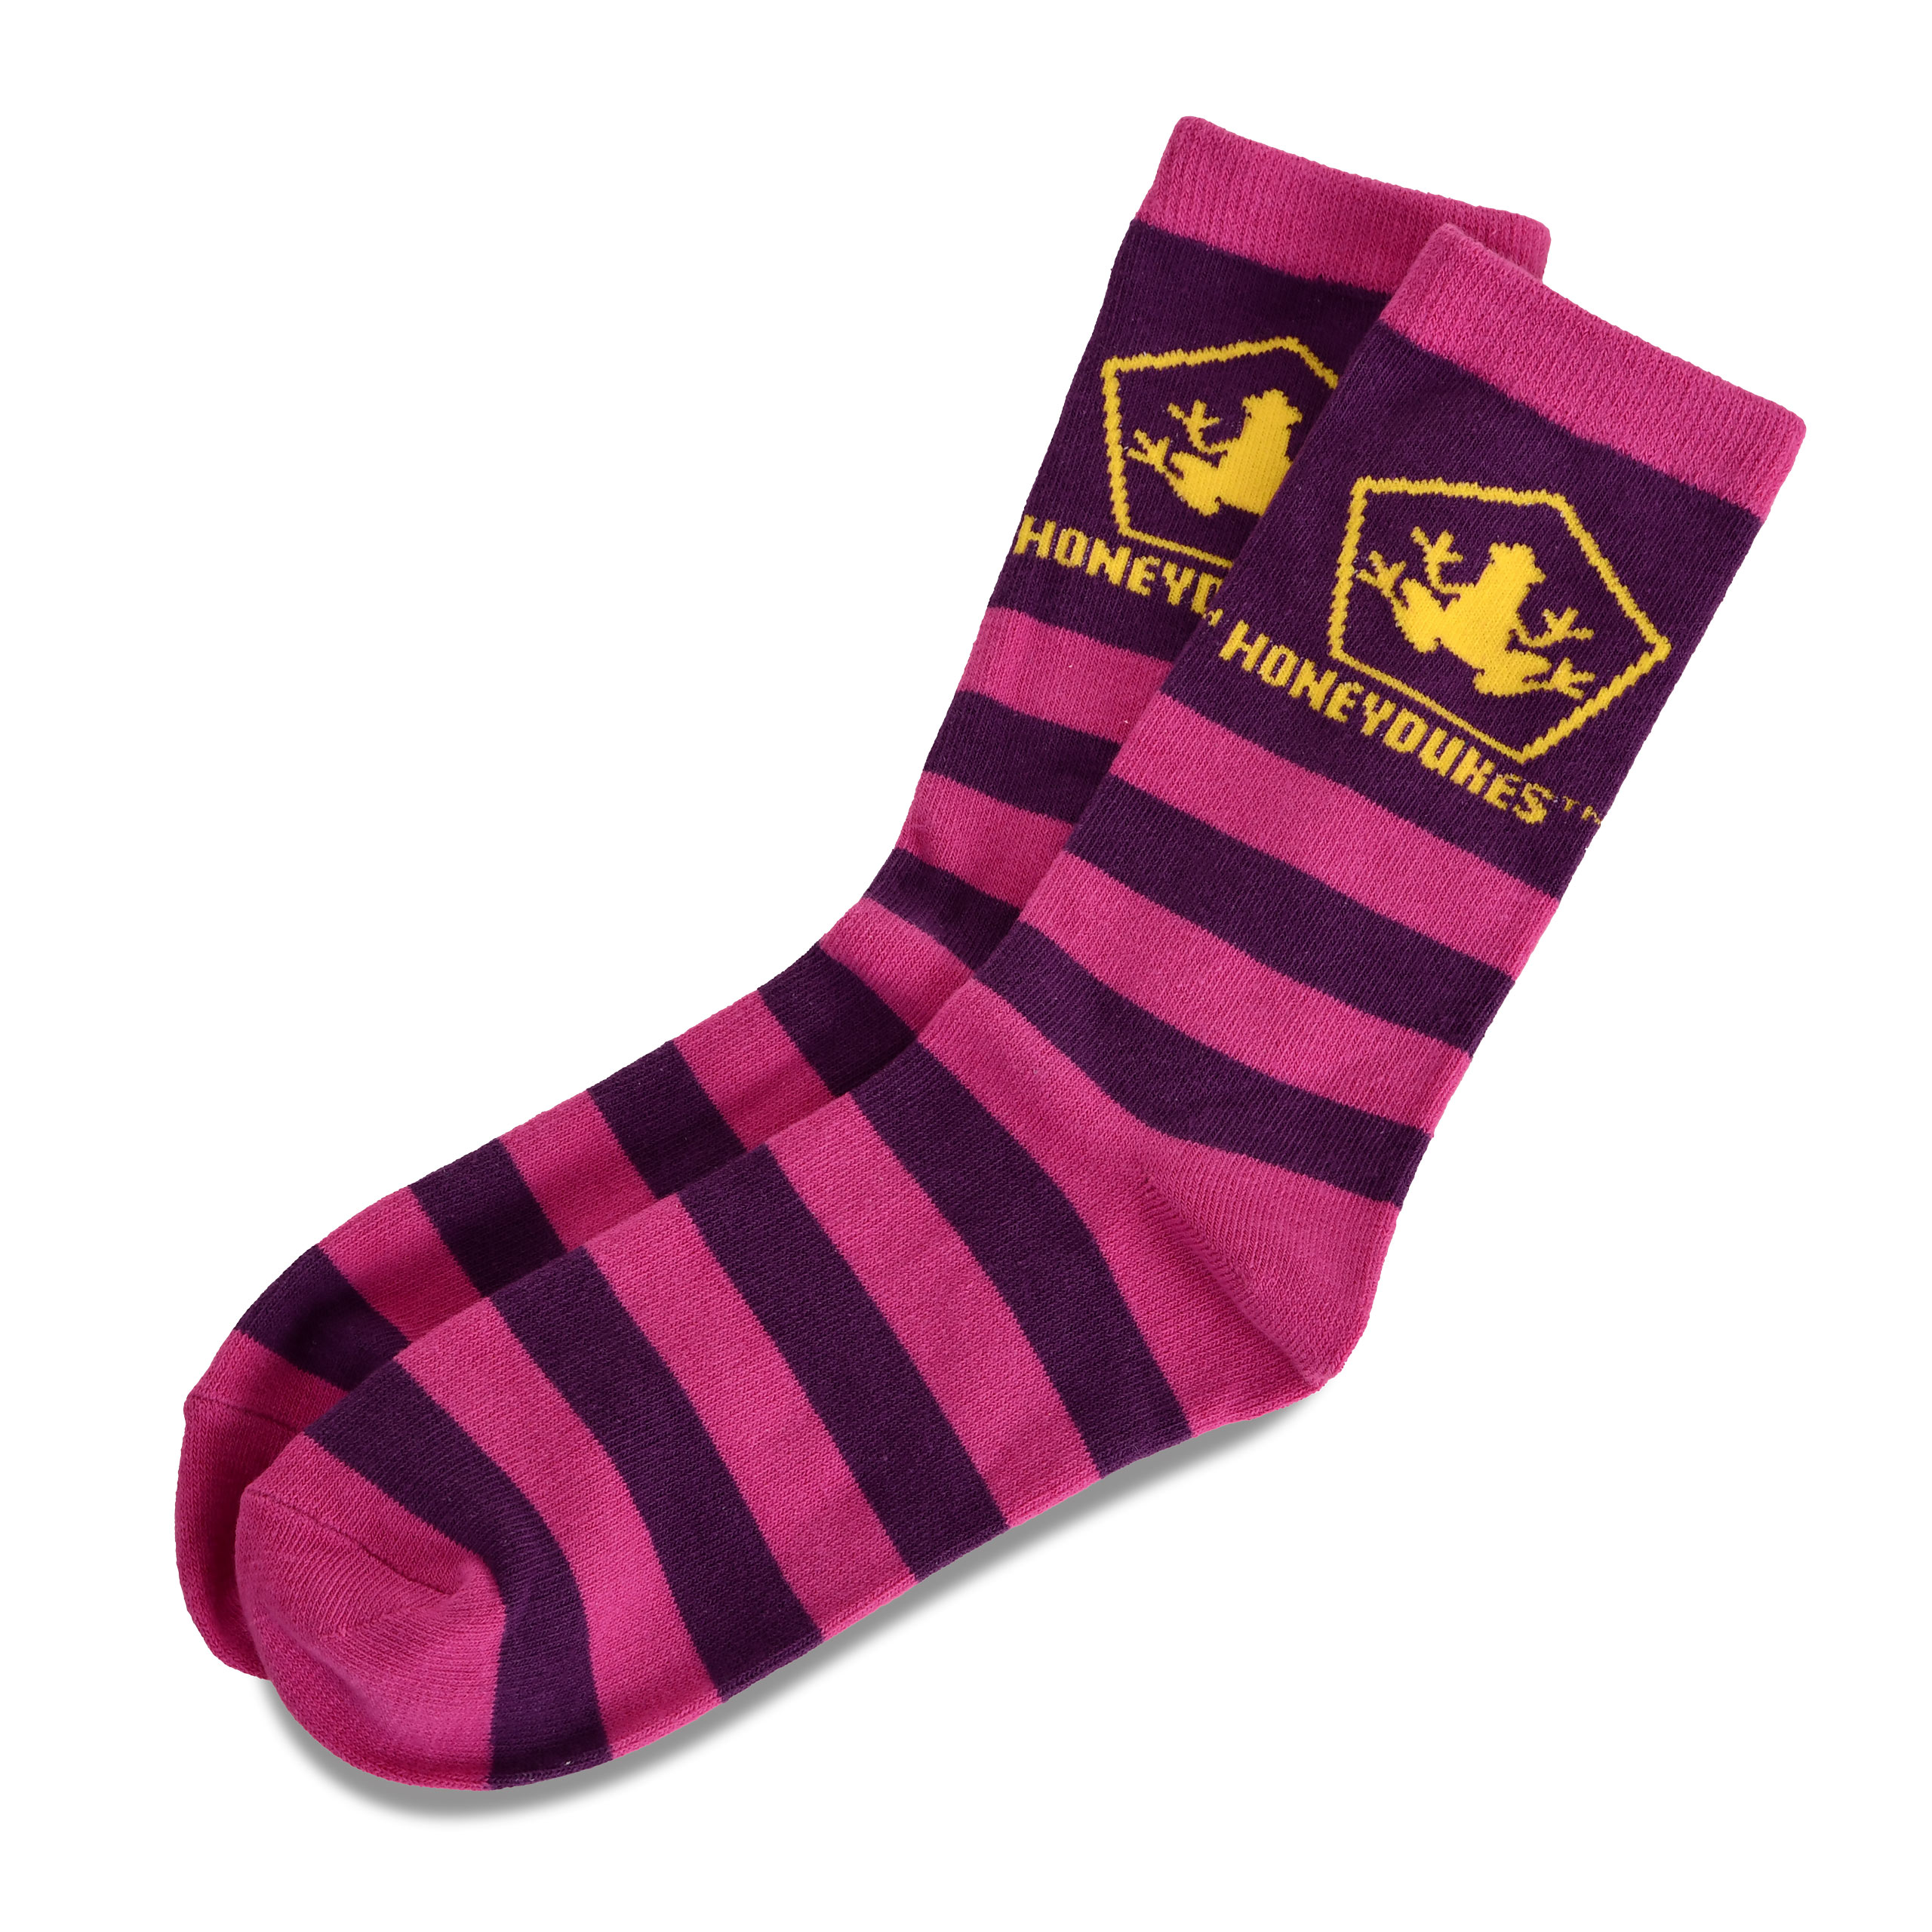 Harry Potter - Chocolate Frog Socks